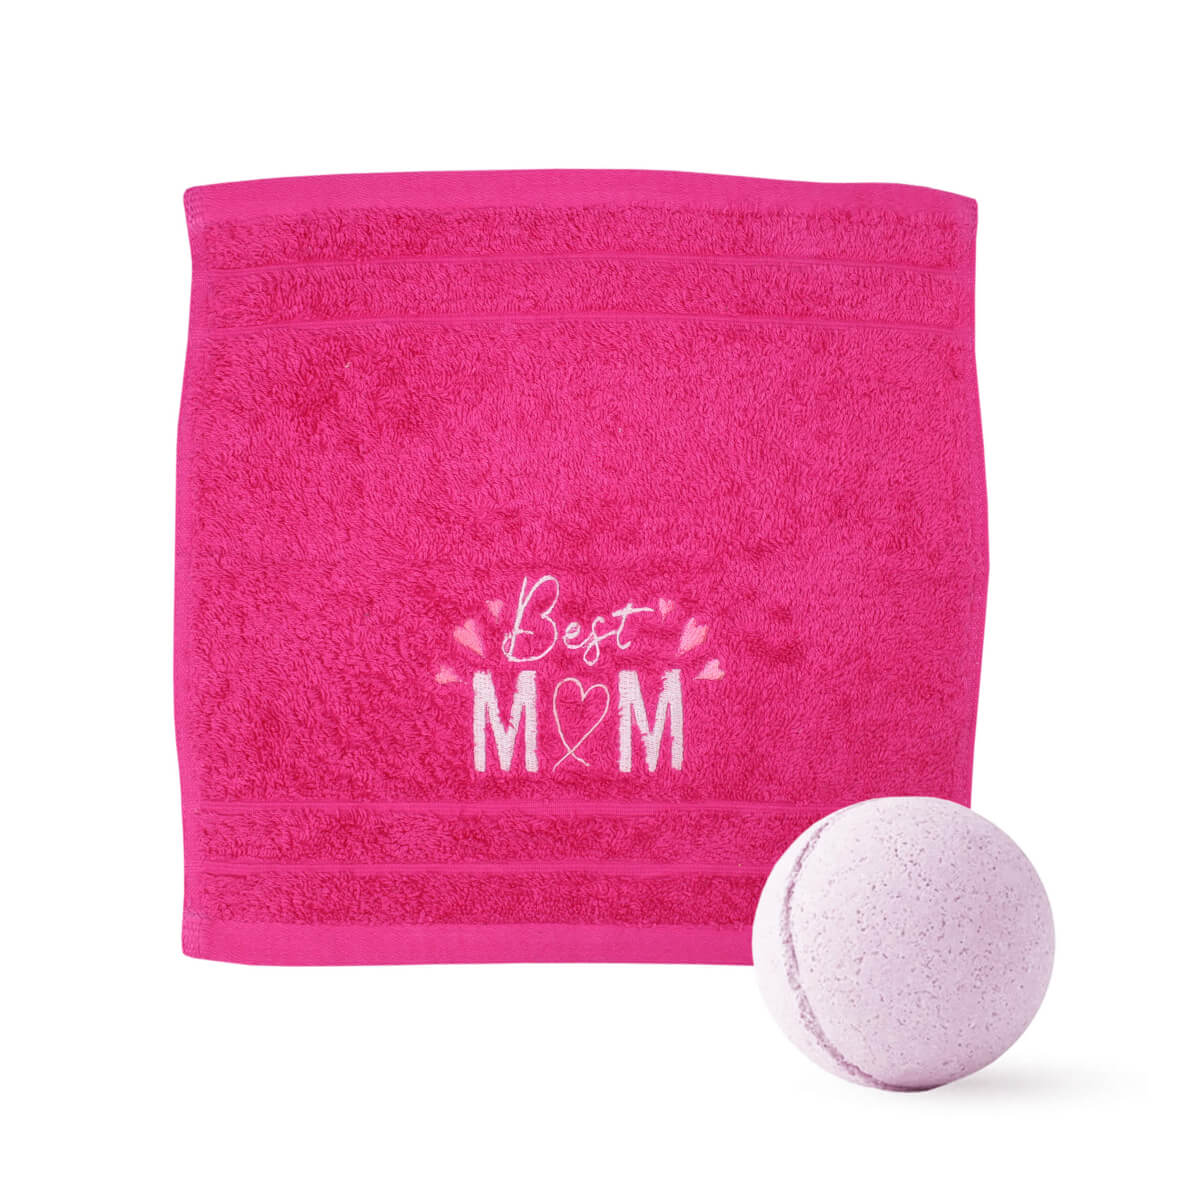 TeddyTs Best Mum Cotton Flannel Face Cloth & Scented Bath Bomb Gift Set Fuschia Pink & Coconut 